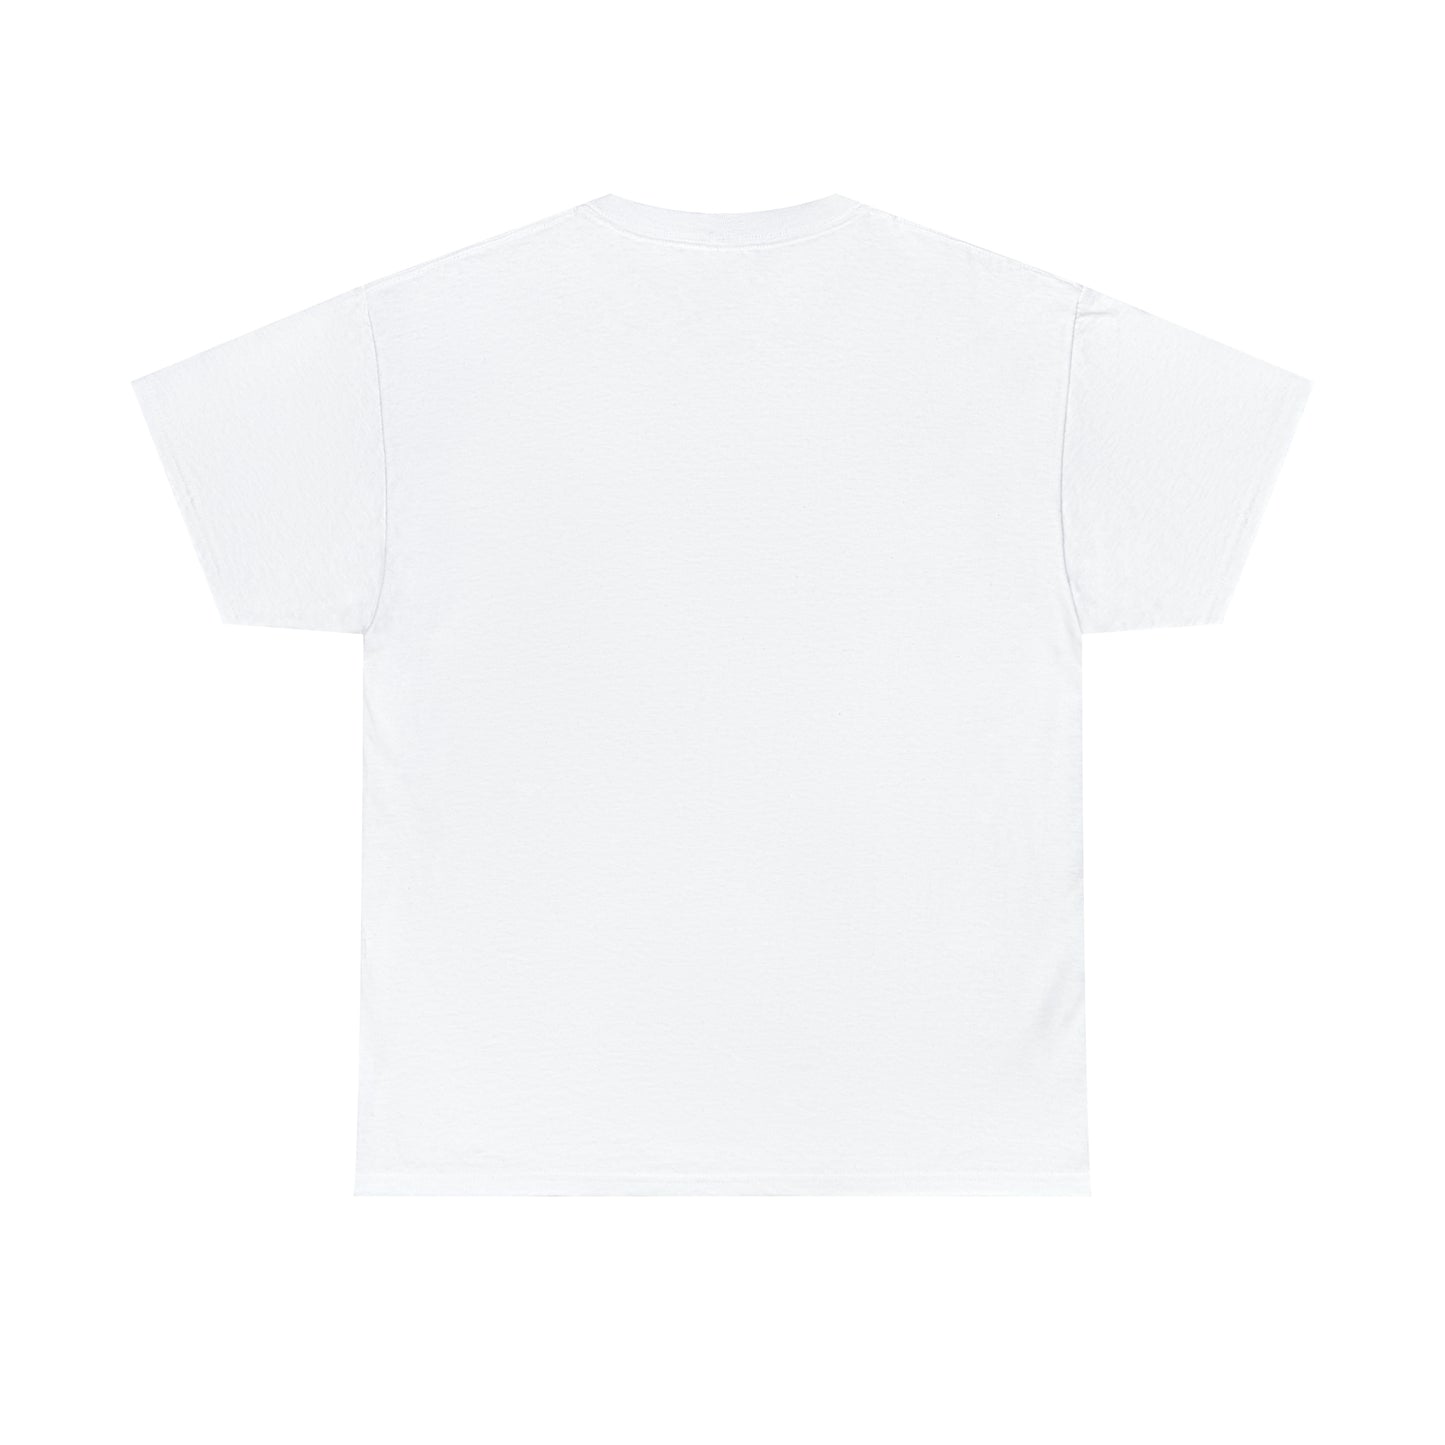 FAAACK OFF Camiseta unisex de algodón pesado